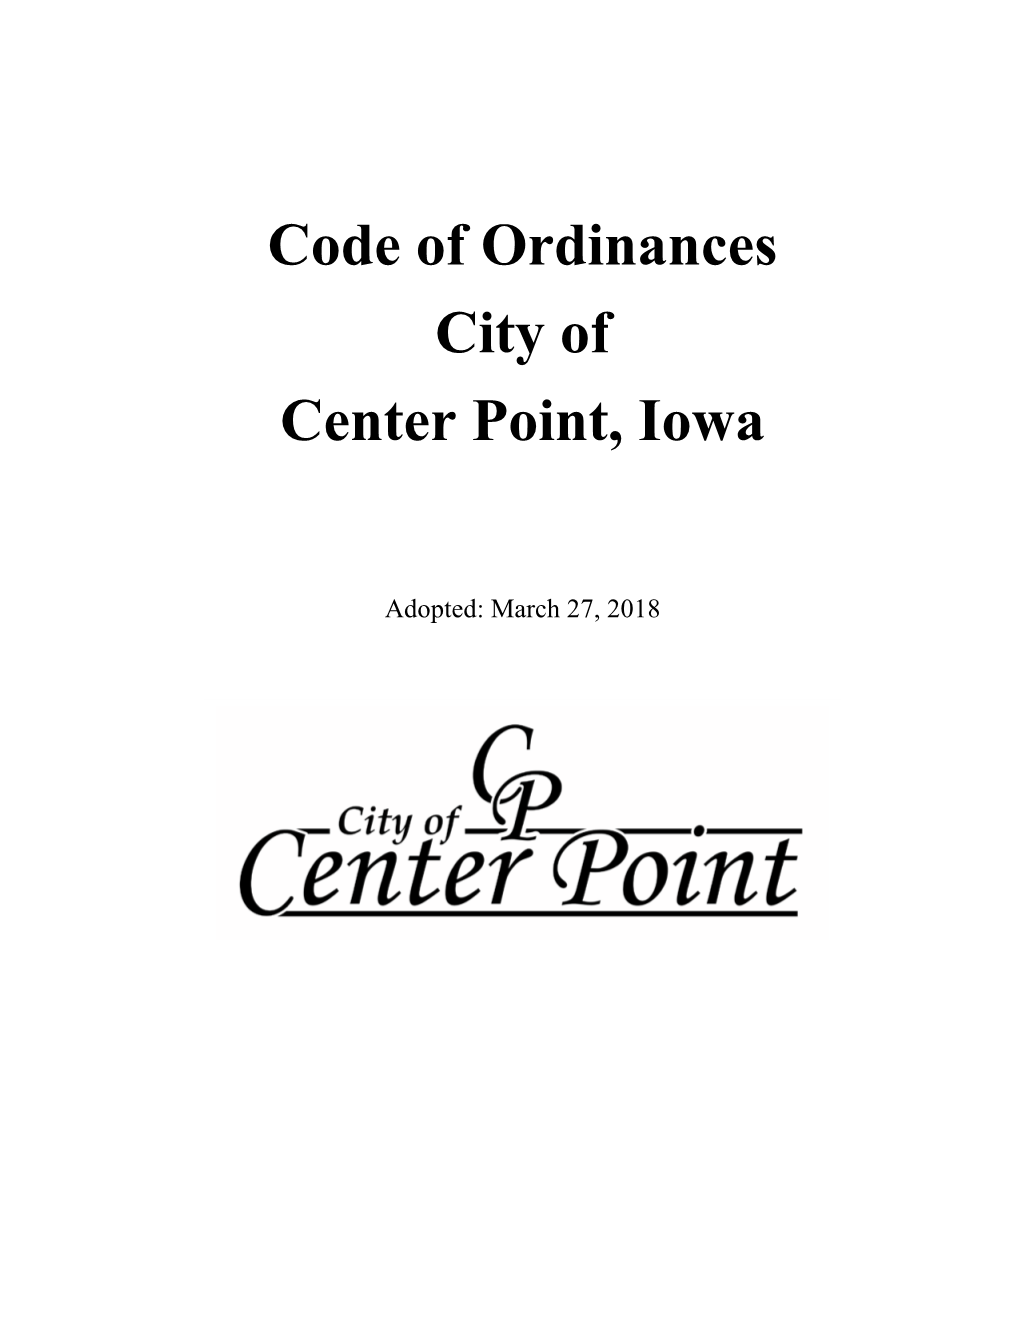 Code of Ordinances City of Center Point, Iowa